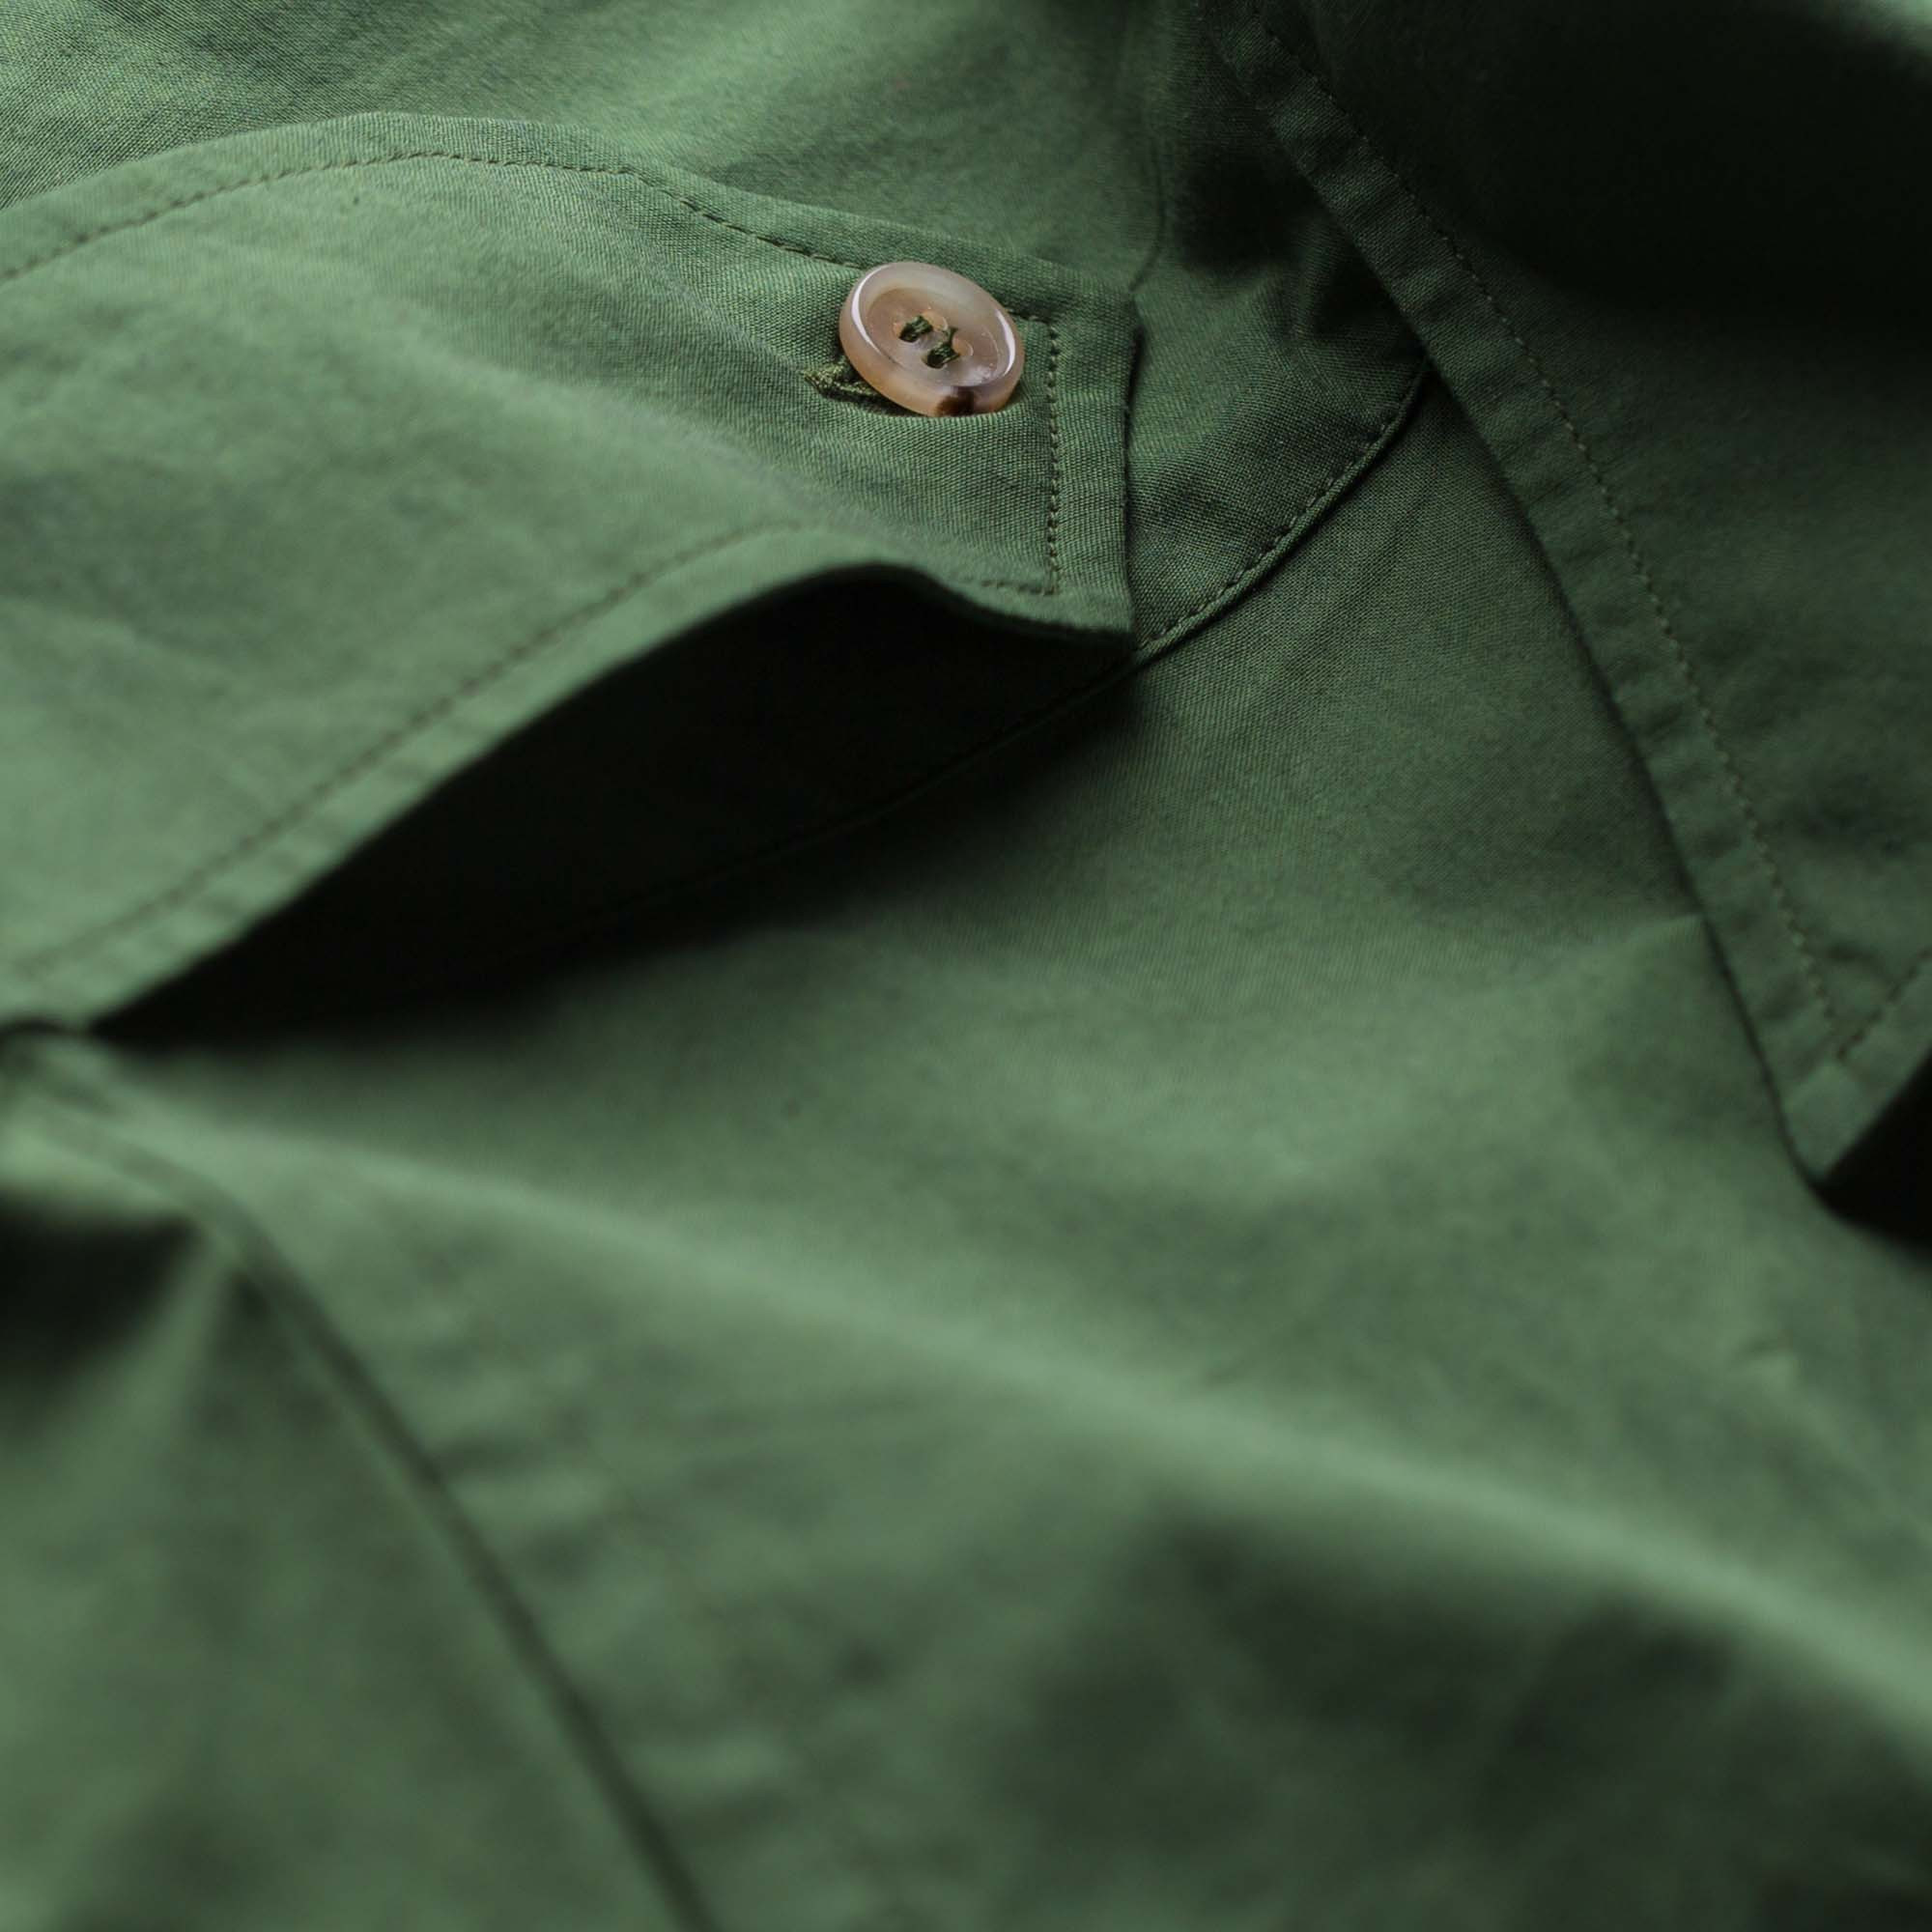 Westley Richards Safari Shirt - Green